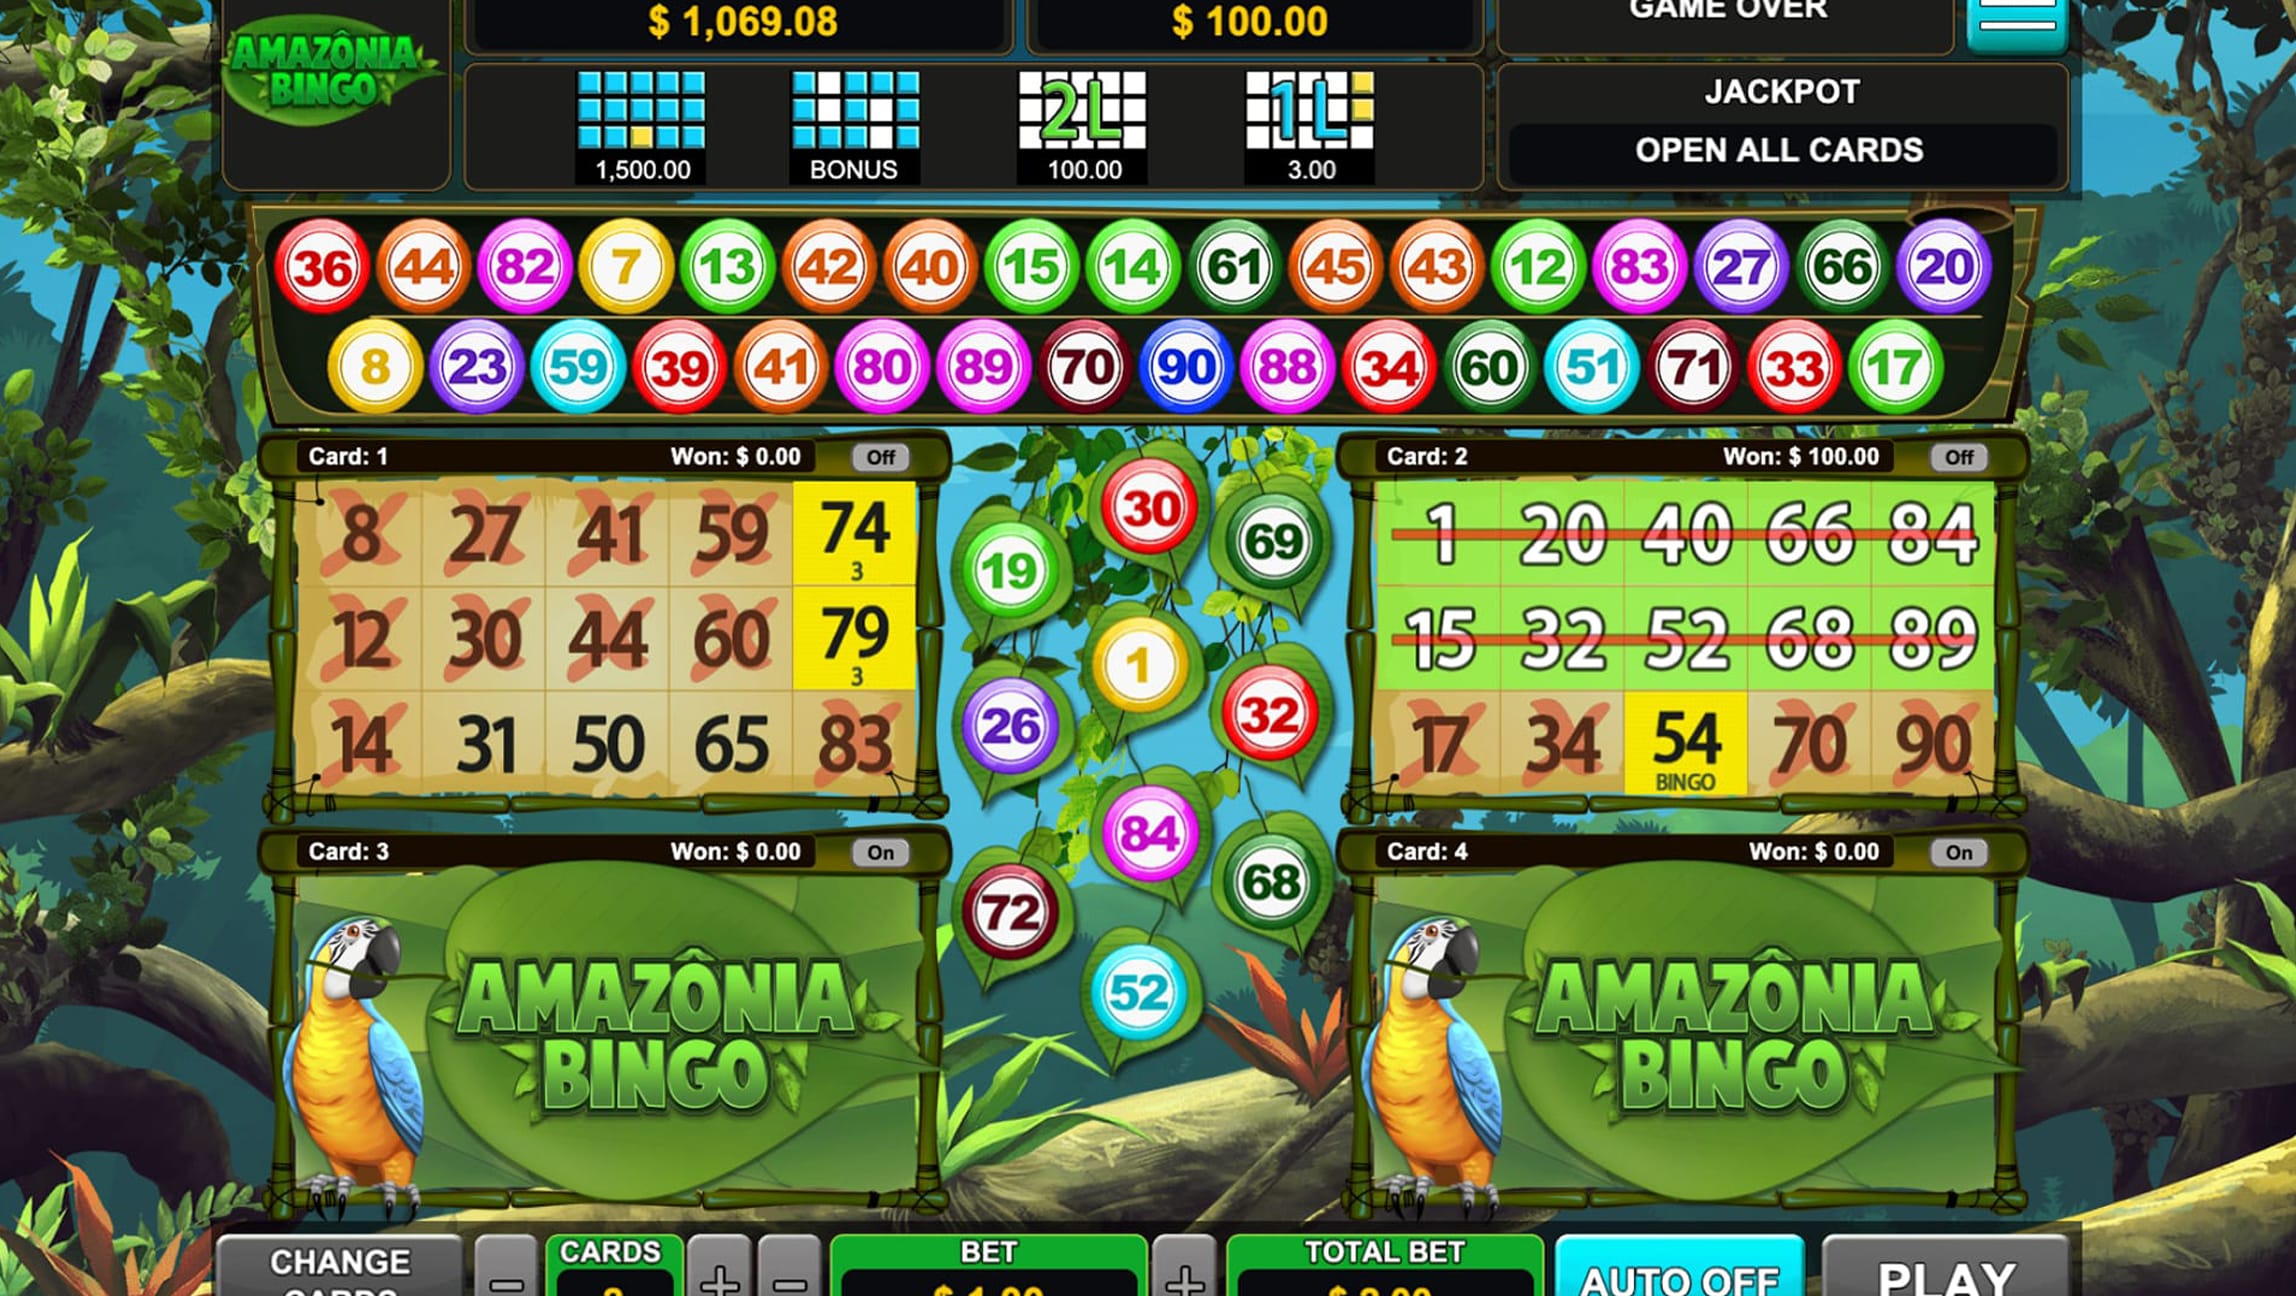 Amazonia bingo game screen